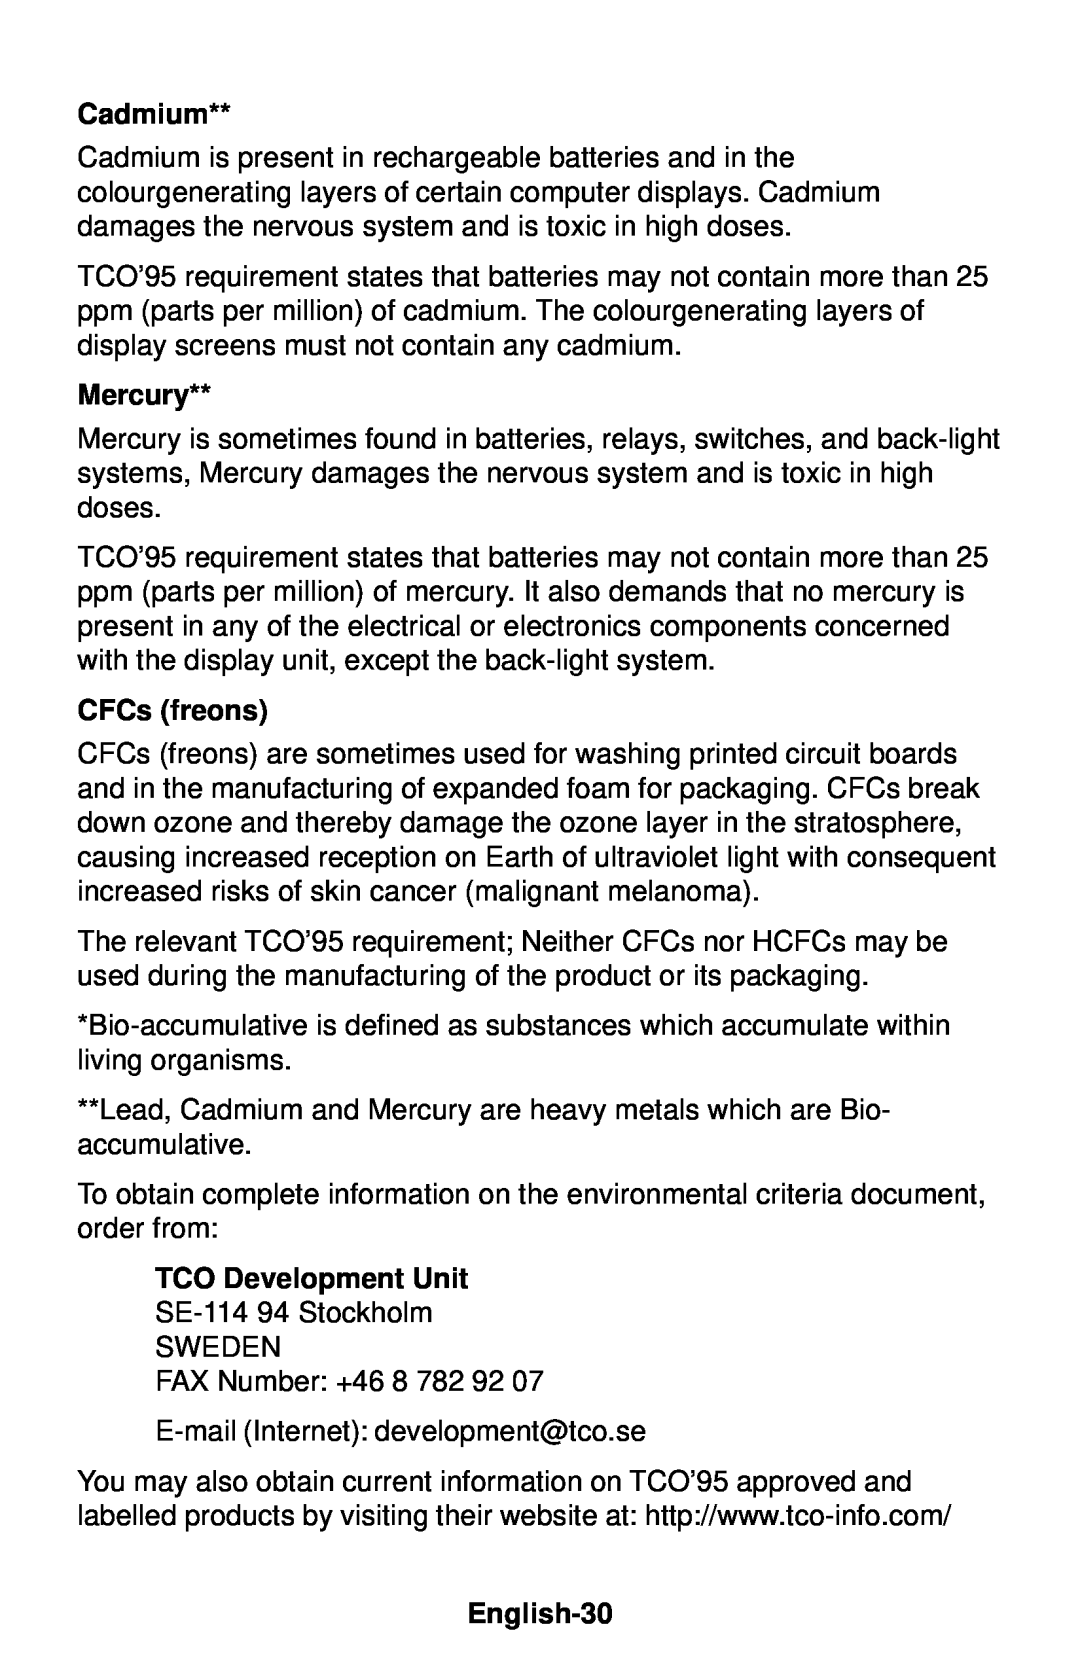 NEC LCD1830 user manual Cadmium, Mercury, CFCs freons, TCO Development Unit, English-30 